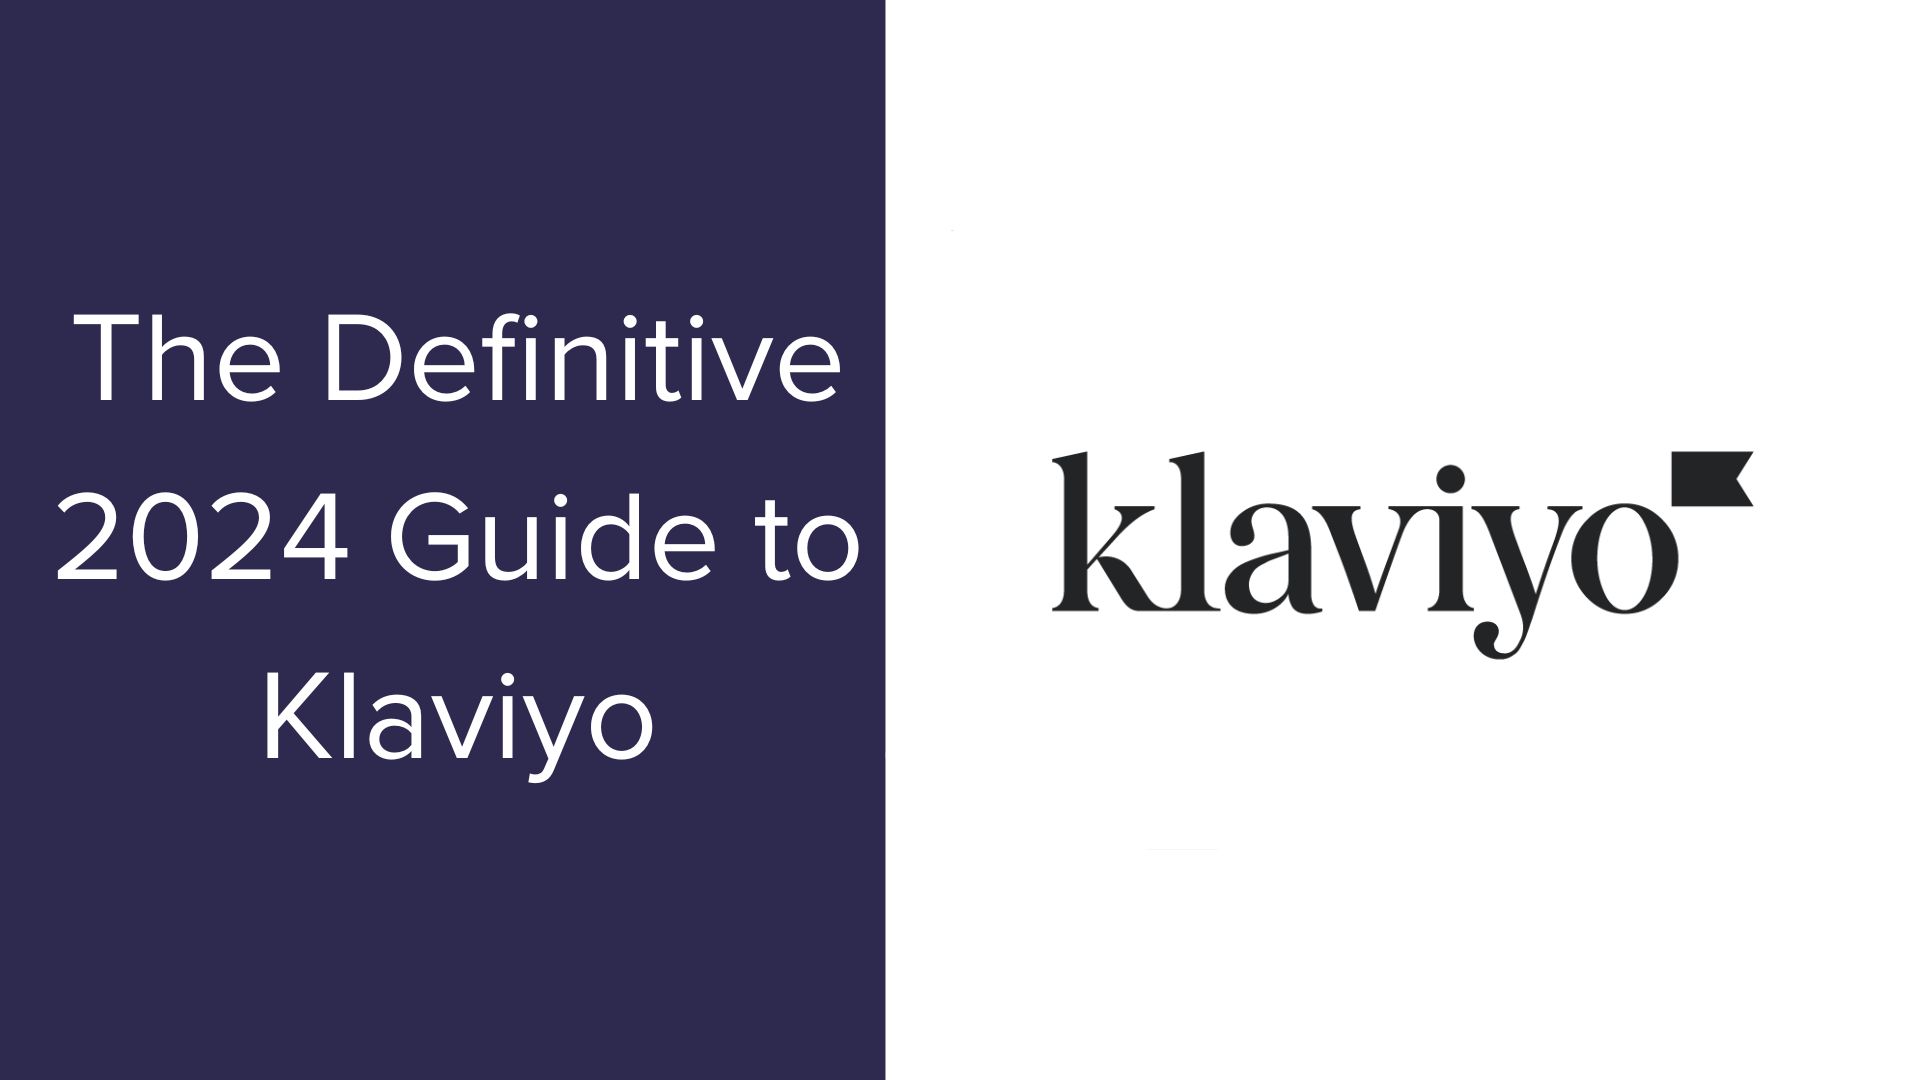 The Definitive 2024 Guide to Klaviyo